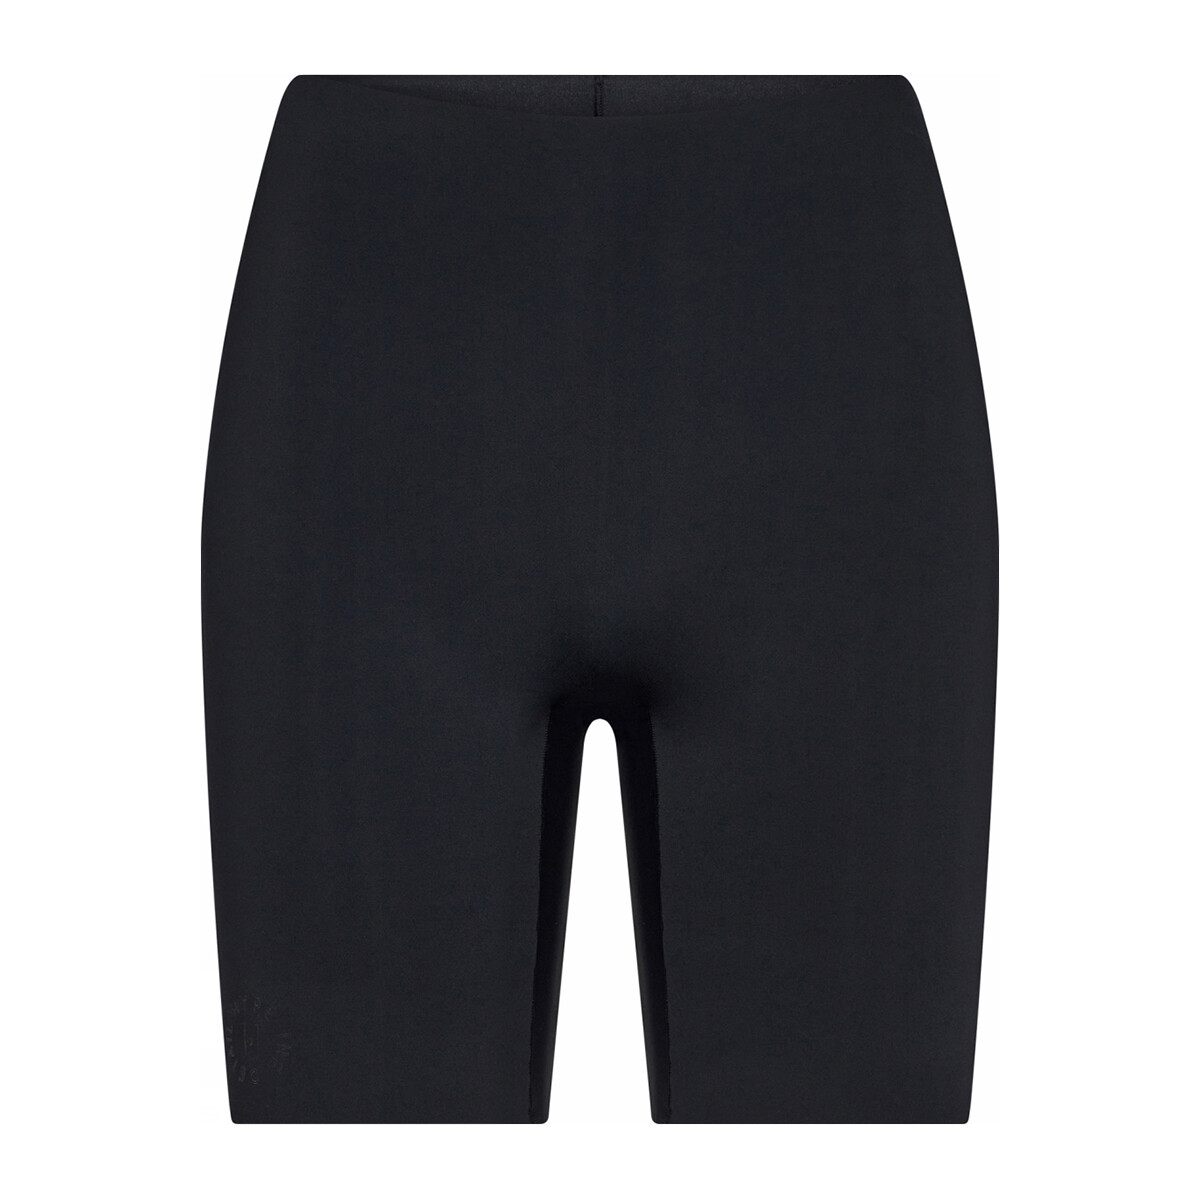 8: Hype The Detail Essentials Shorts, Farve: Sort, Størrelse: XXL, Dame